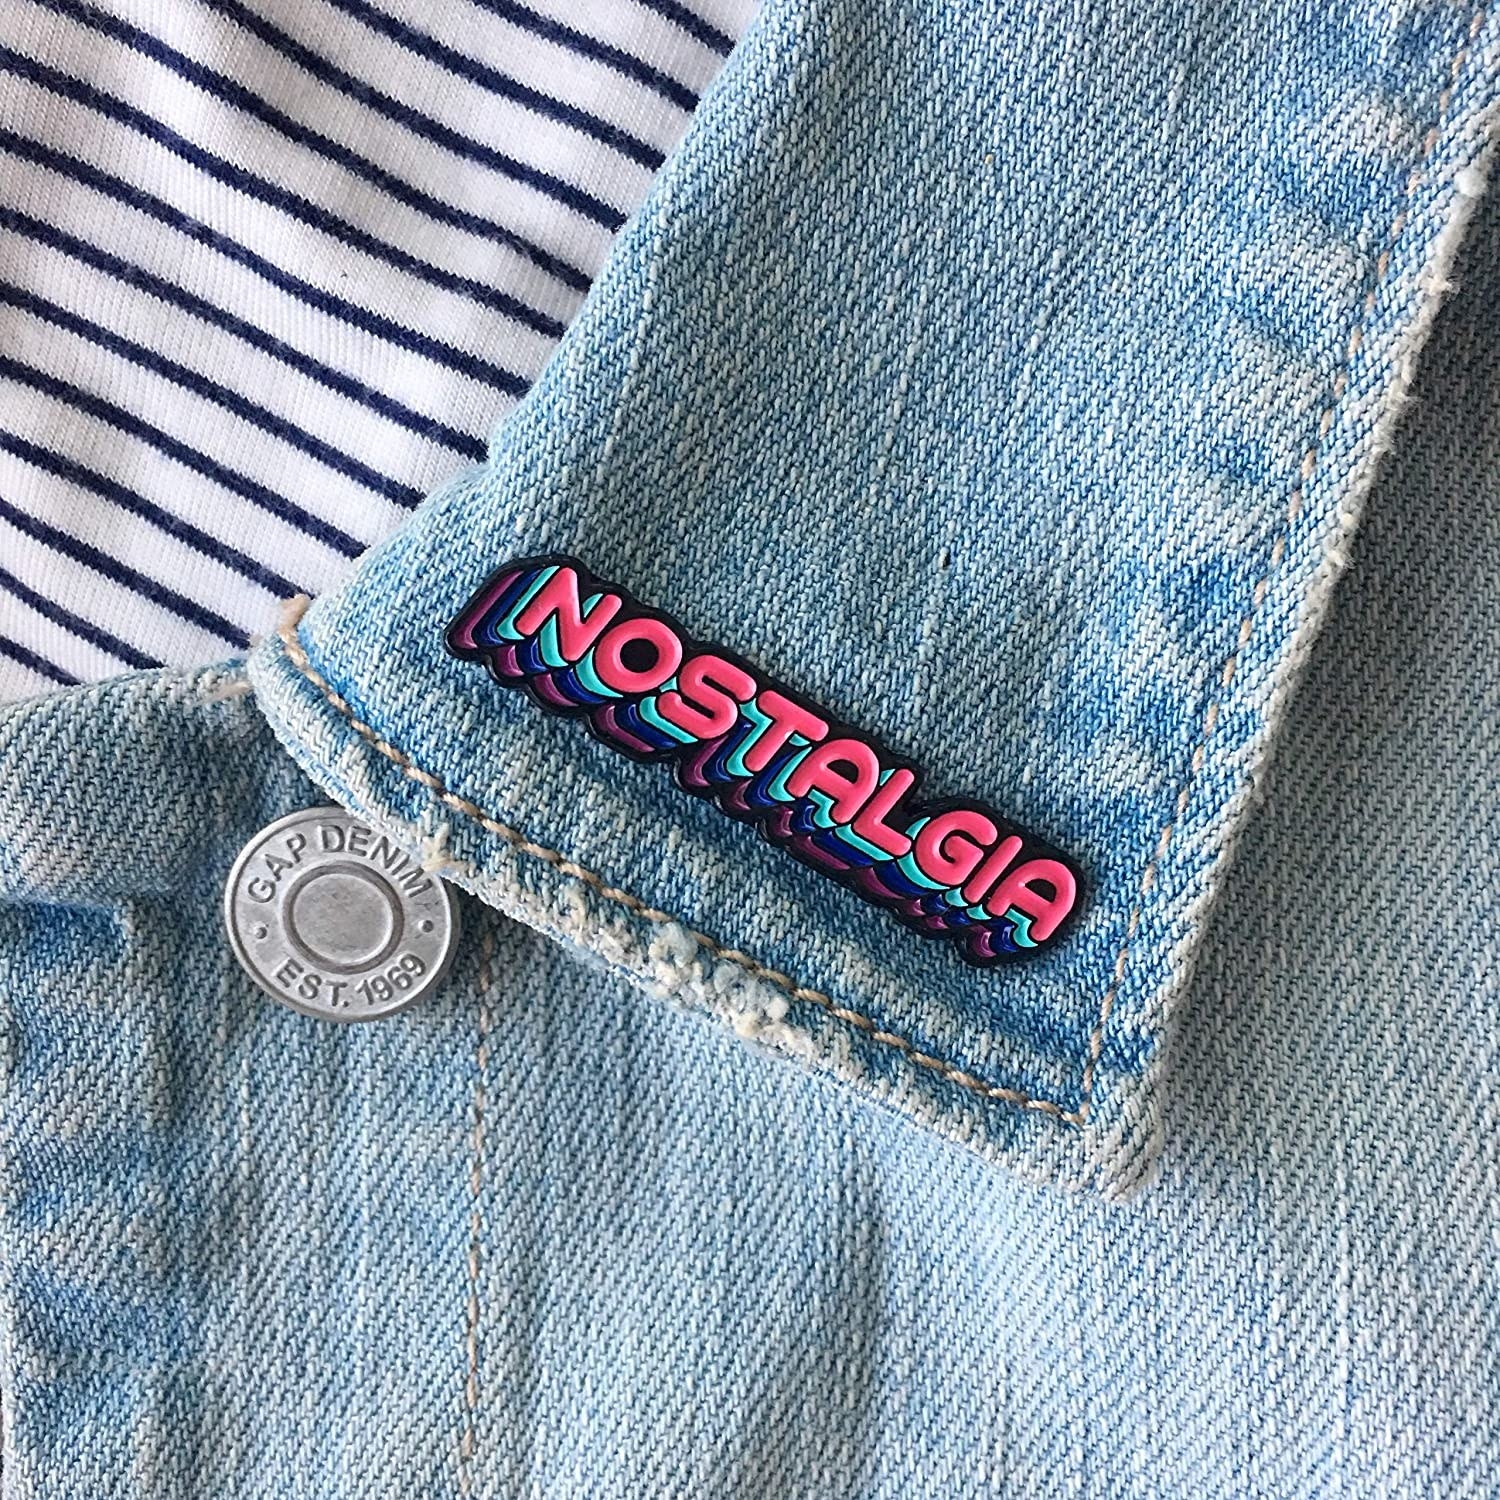 The Nostalgia pin on the lapel of a denim jacket